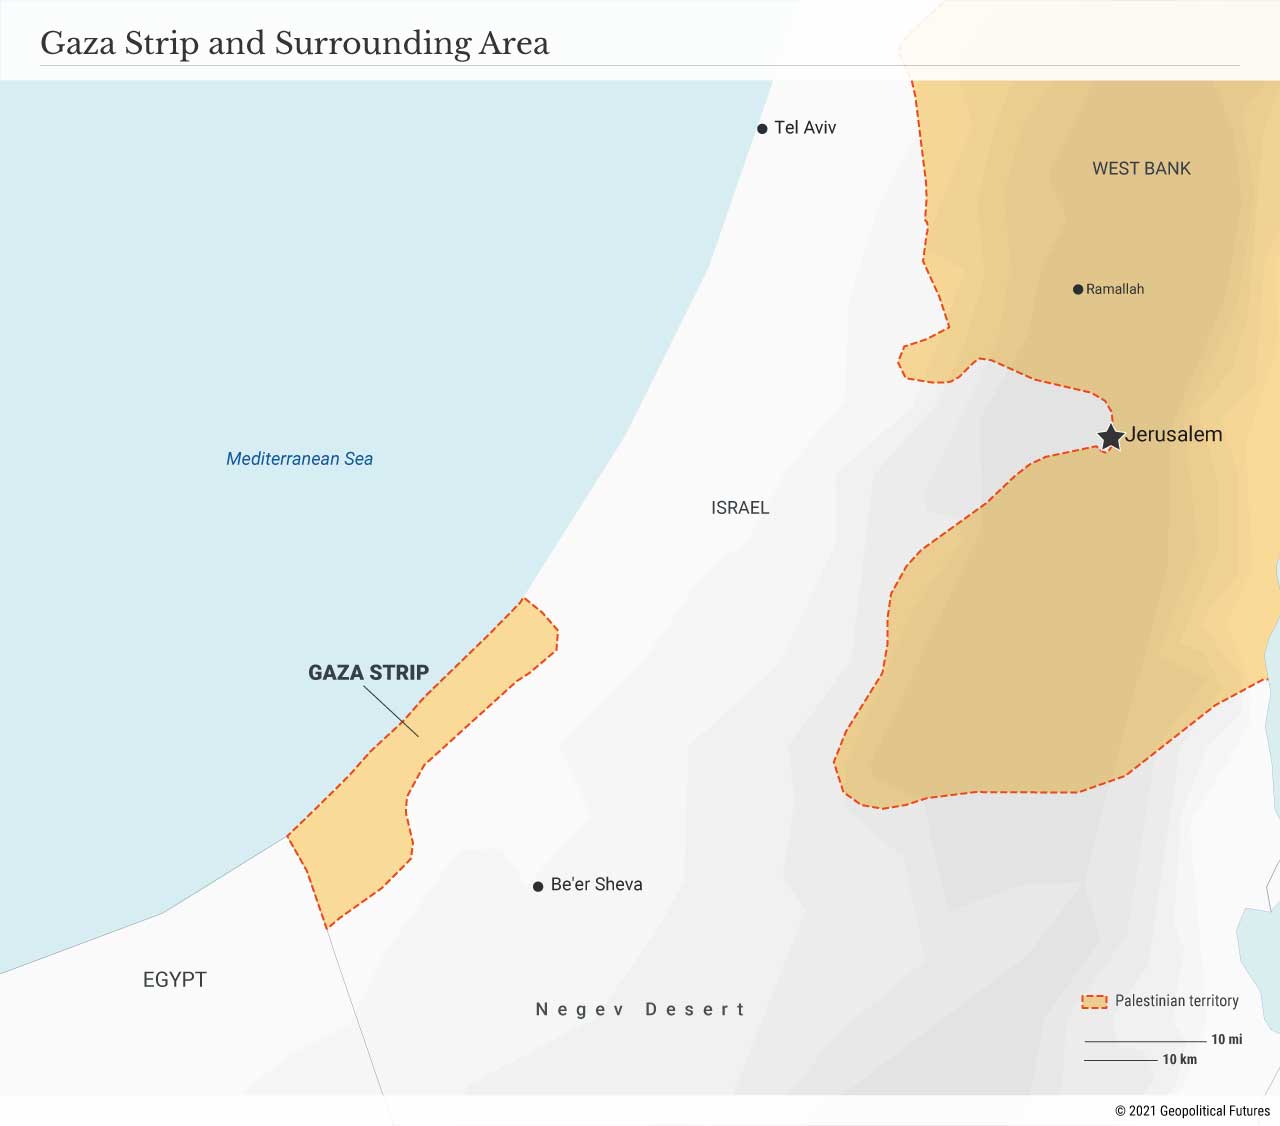 Gaza Strip and Surrounding Area